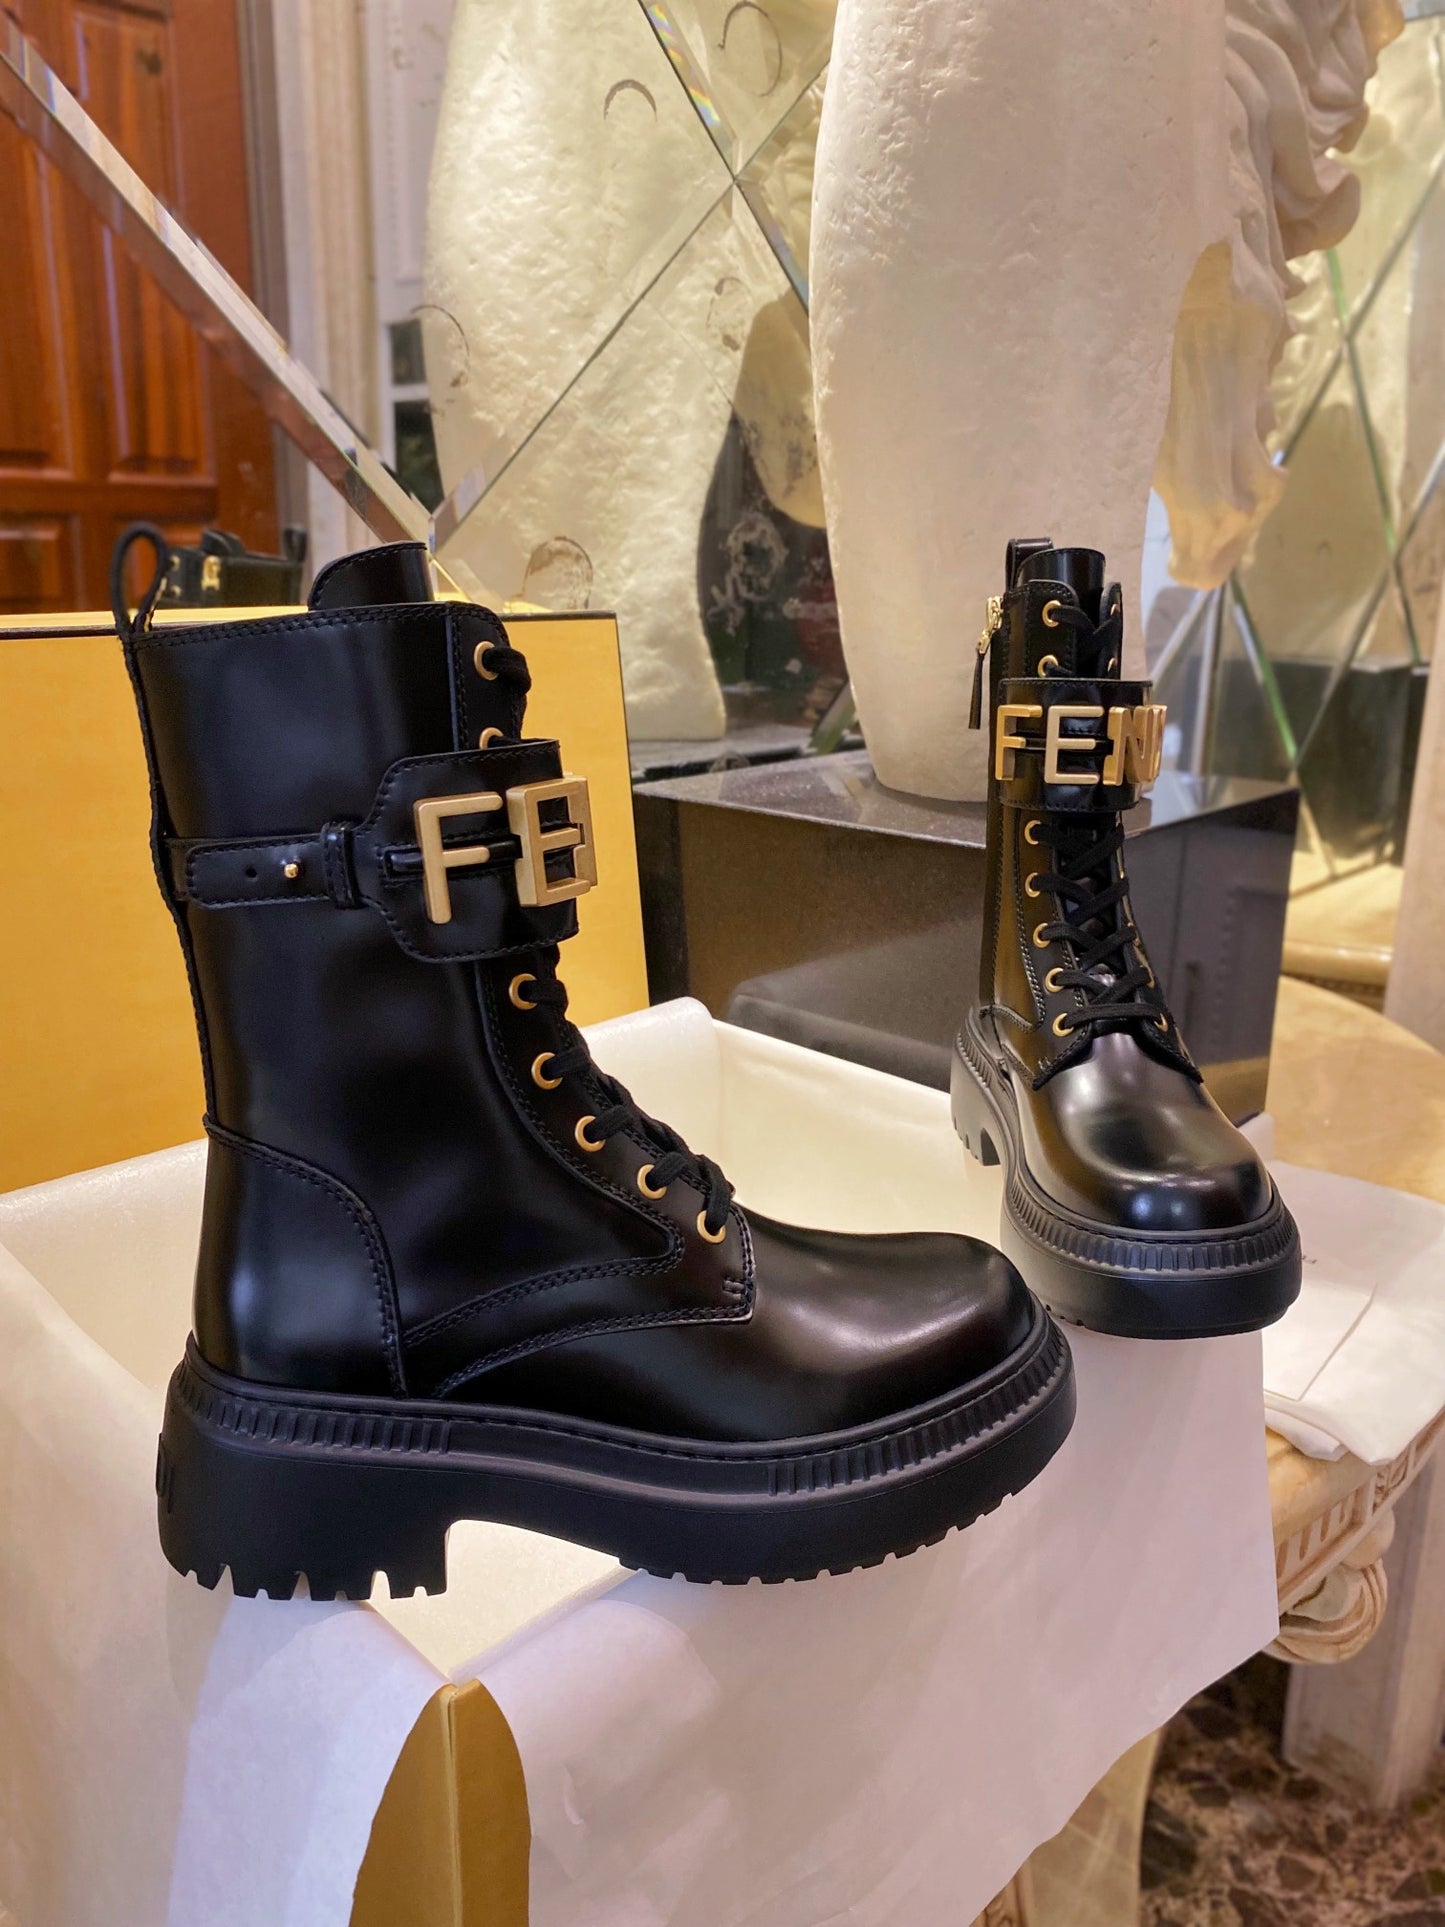 FENDI Graphy Boots